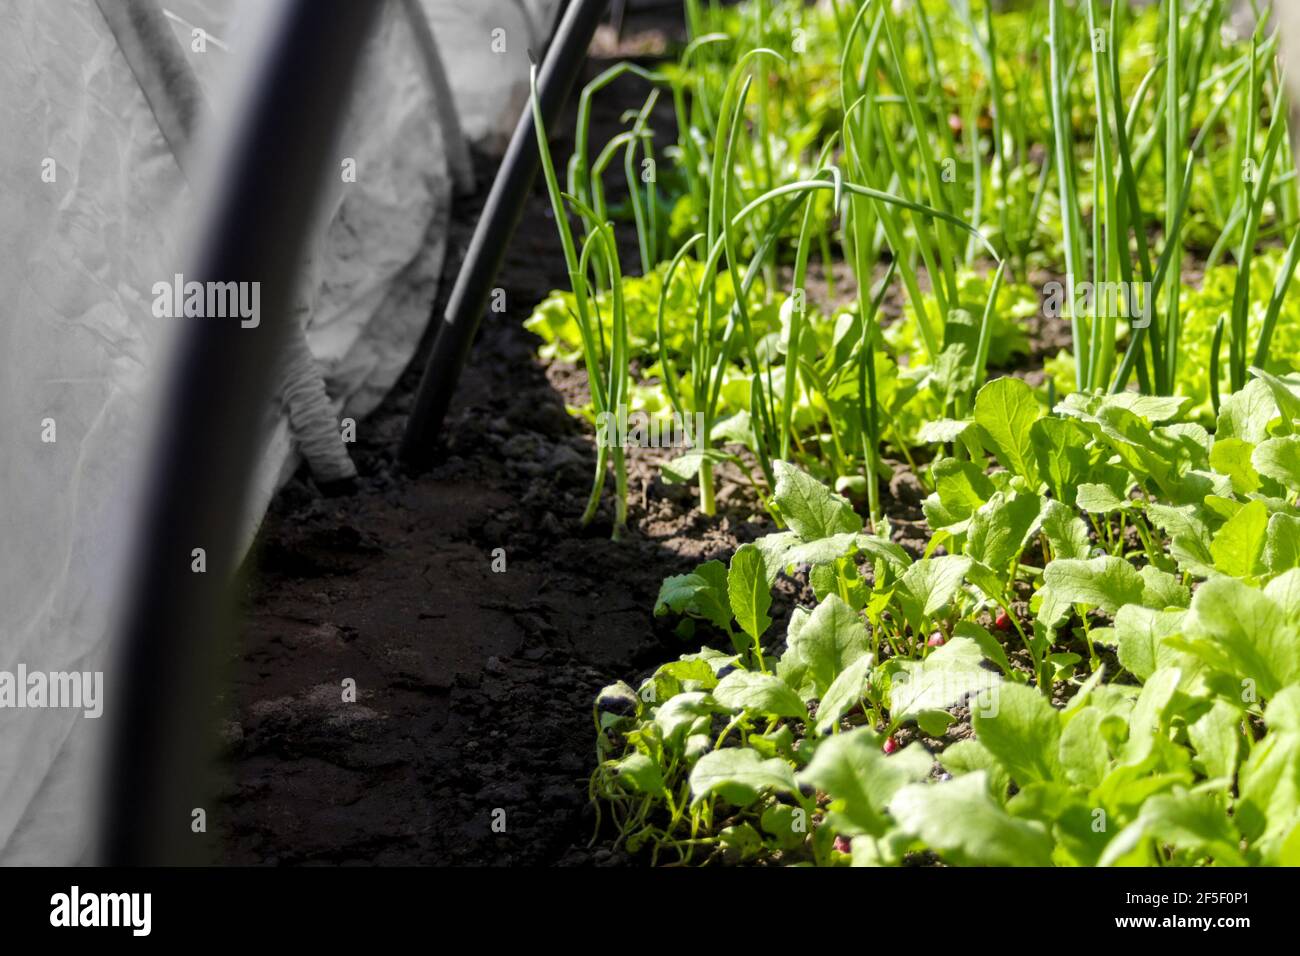 Defocus vegetable gardening. Onion, leek, aragula, spinach, salad, lettuce. Greens, greenery in arch solar house. Organic farming, seedlings growing Stock Photo